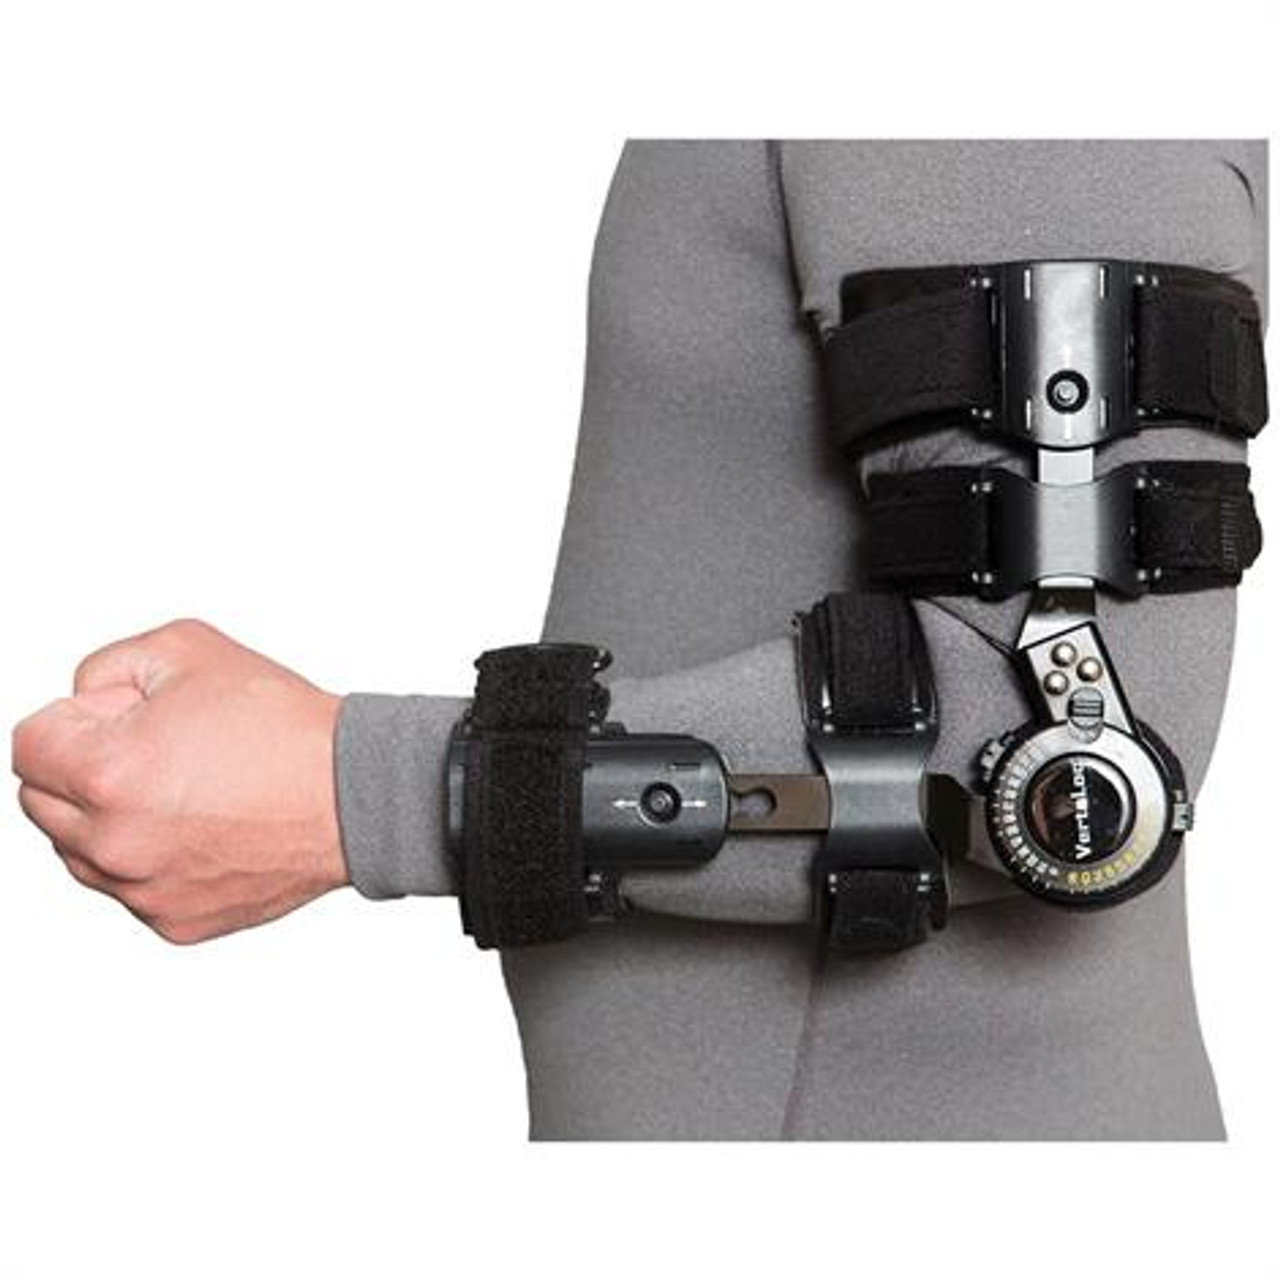 Brace Align Medical Prescription Elbow Brace PDAC Approved L3760